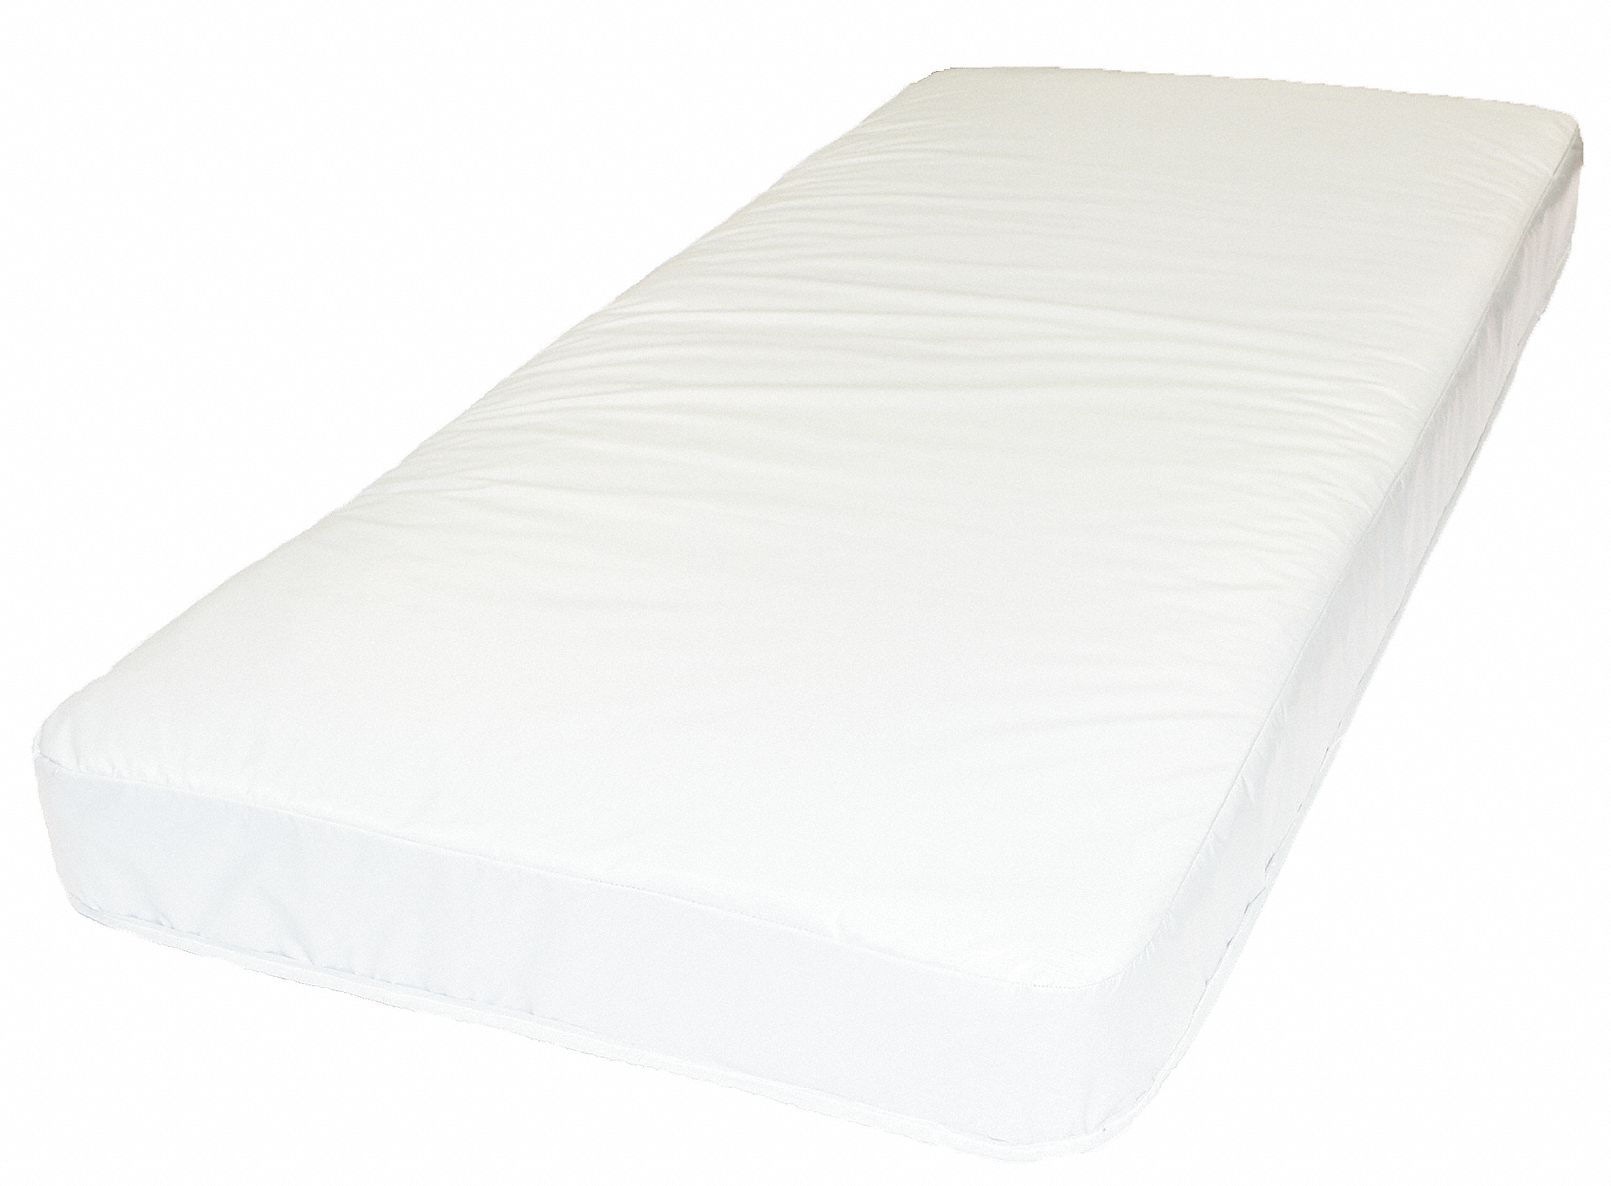 36 x 84 memory foam mattress